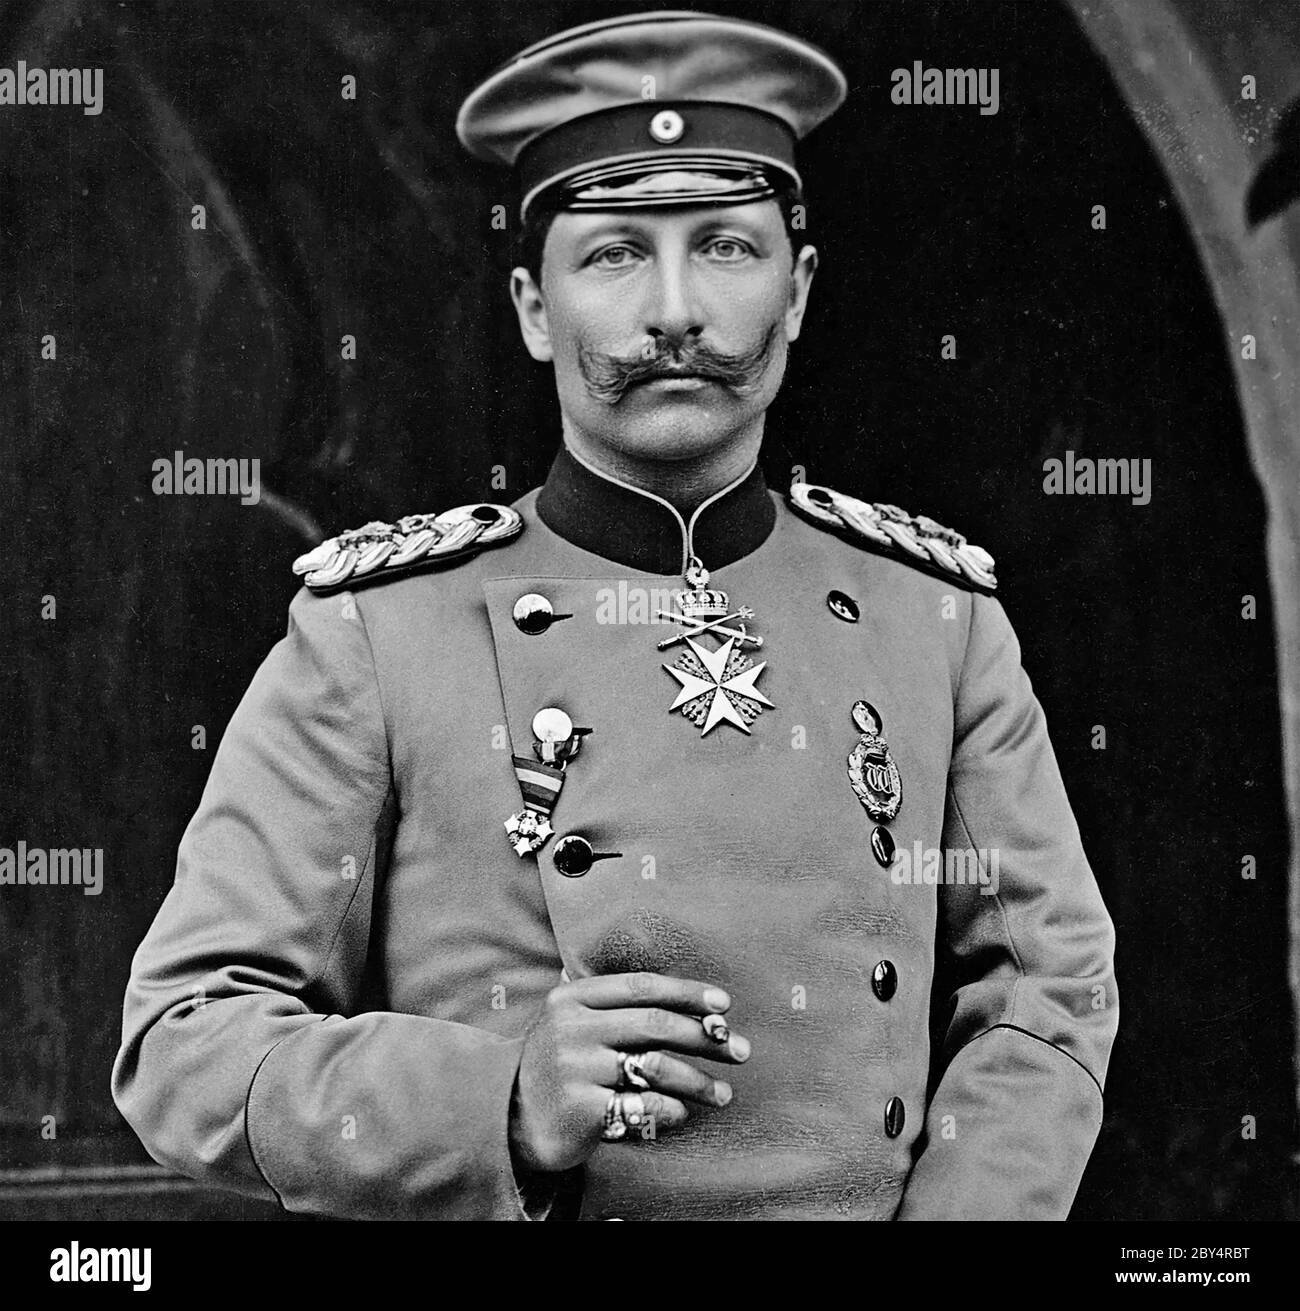 Empereur Wilhelm II. - Page 2 59_5w7c0x